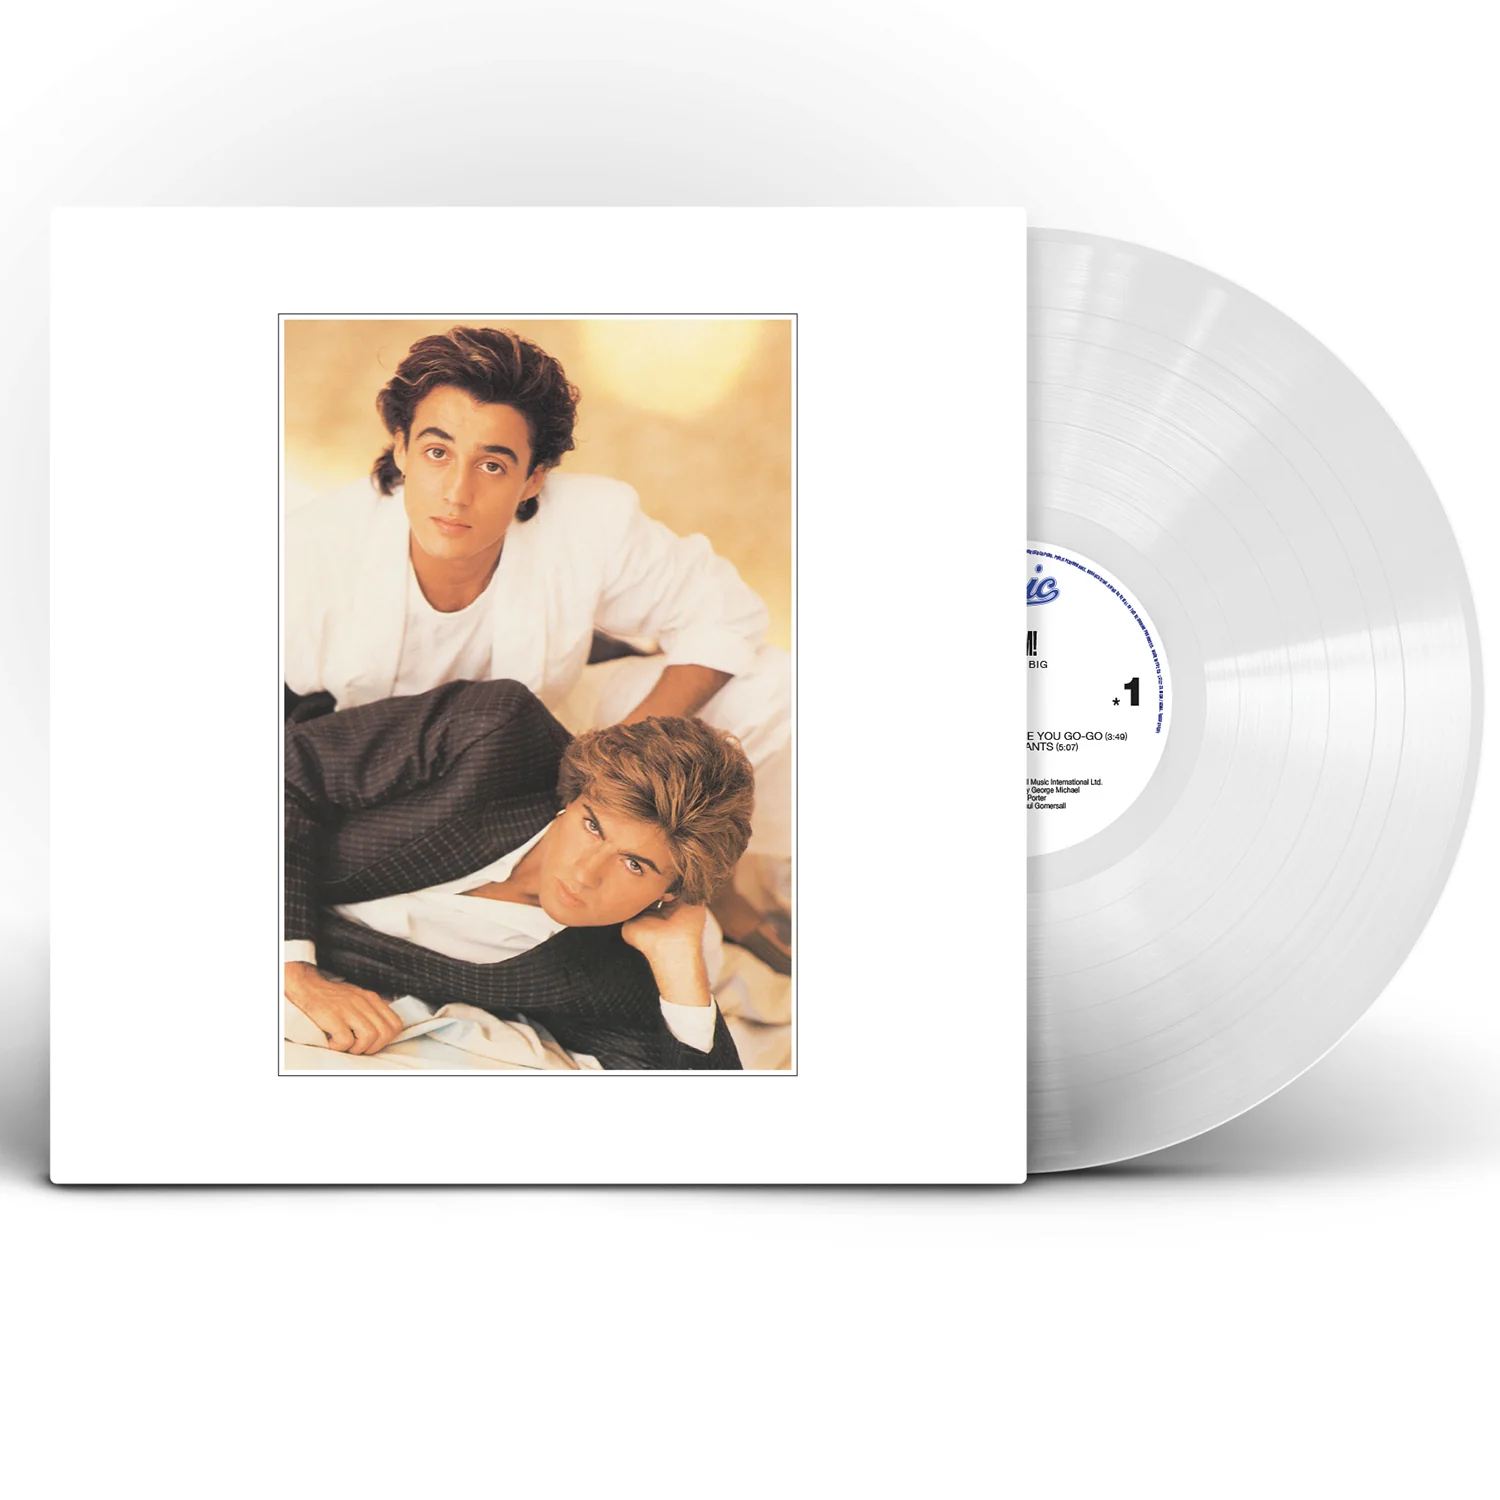 Wham - Make It Big: Limited Edition White Vinyl LP.